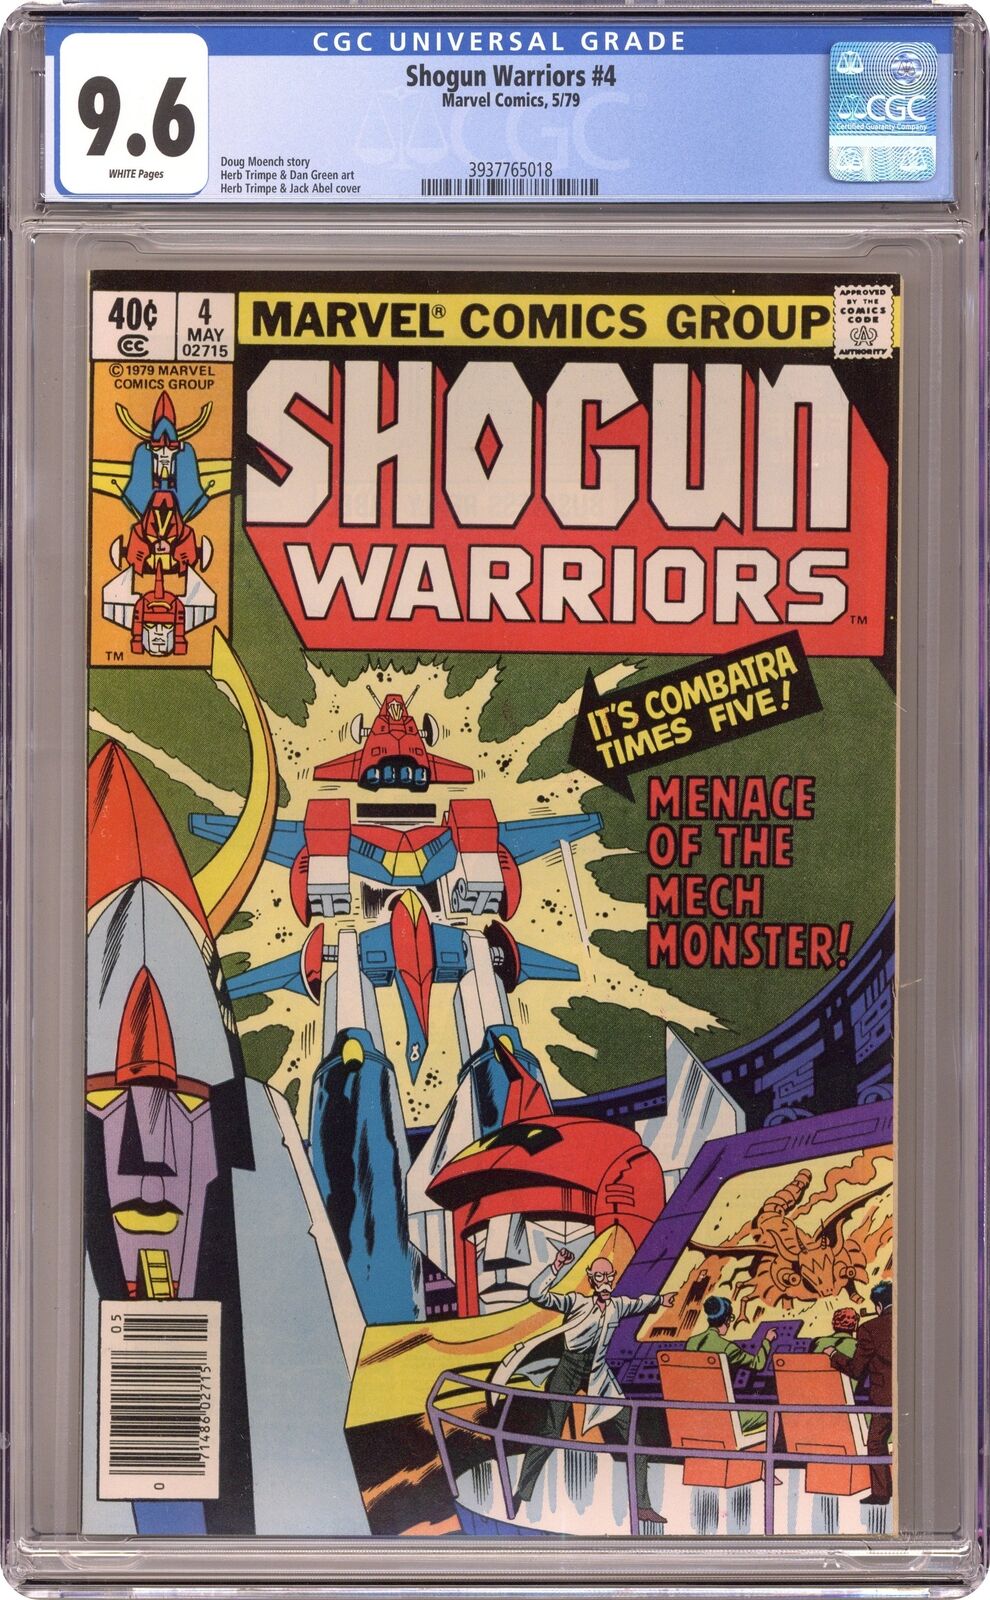 Shogun Warriors #4 CGC 9.6 1979 3937765018